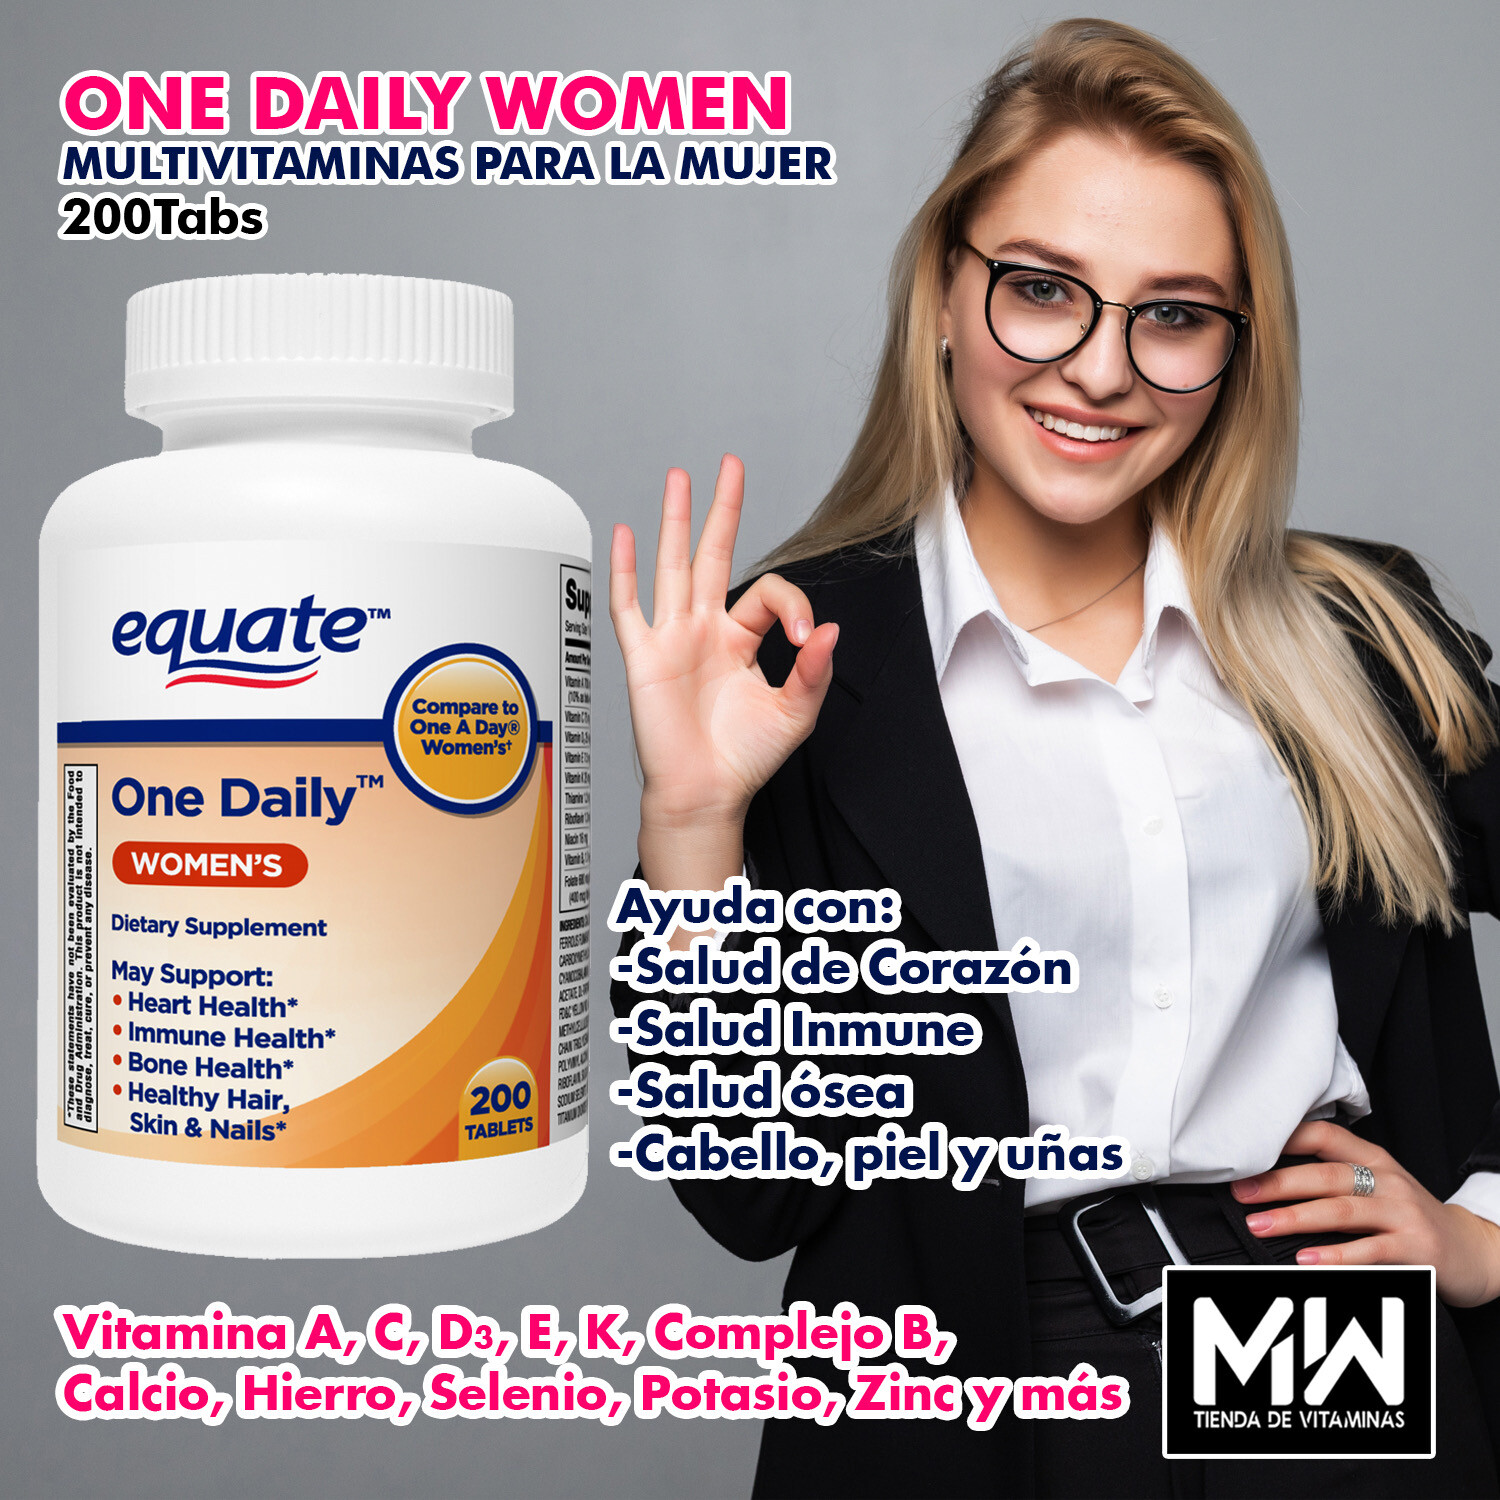 One Daily Women/Mujer Multivitaminas, 200tabs